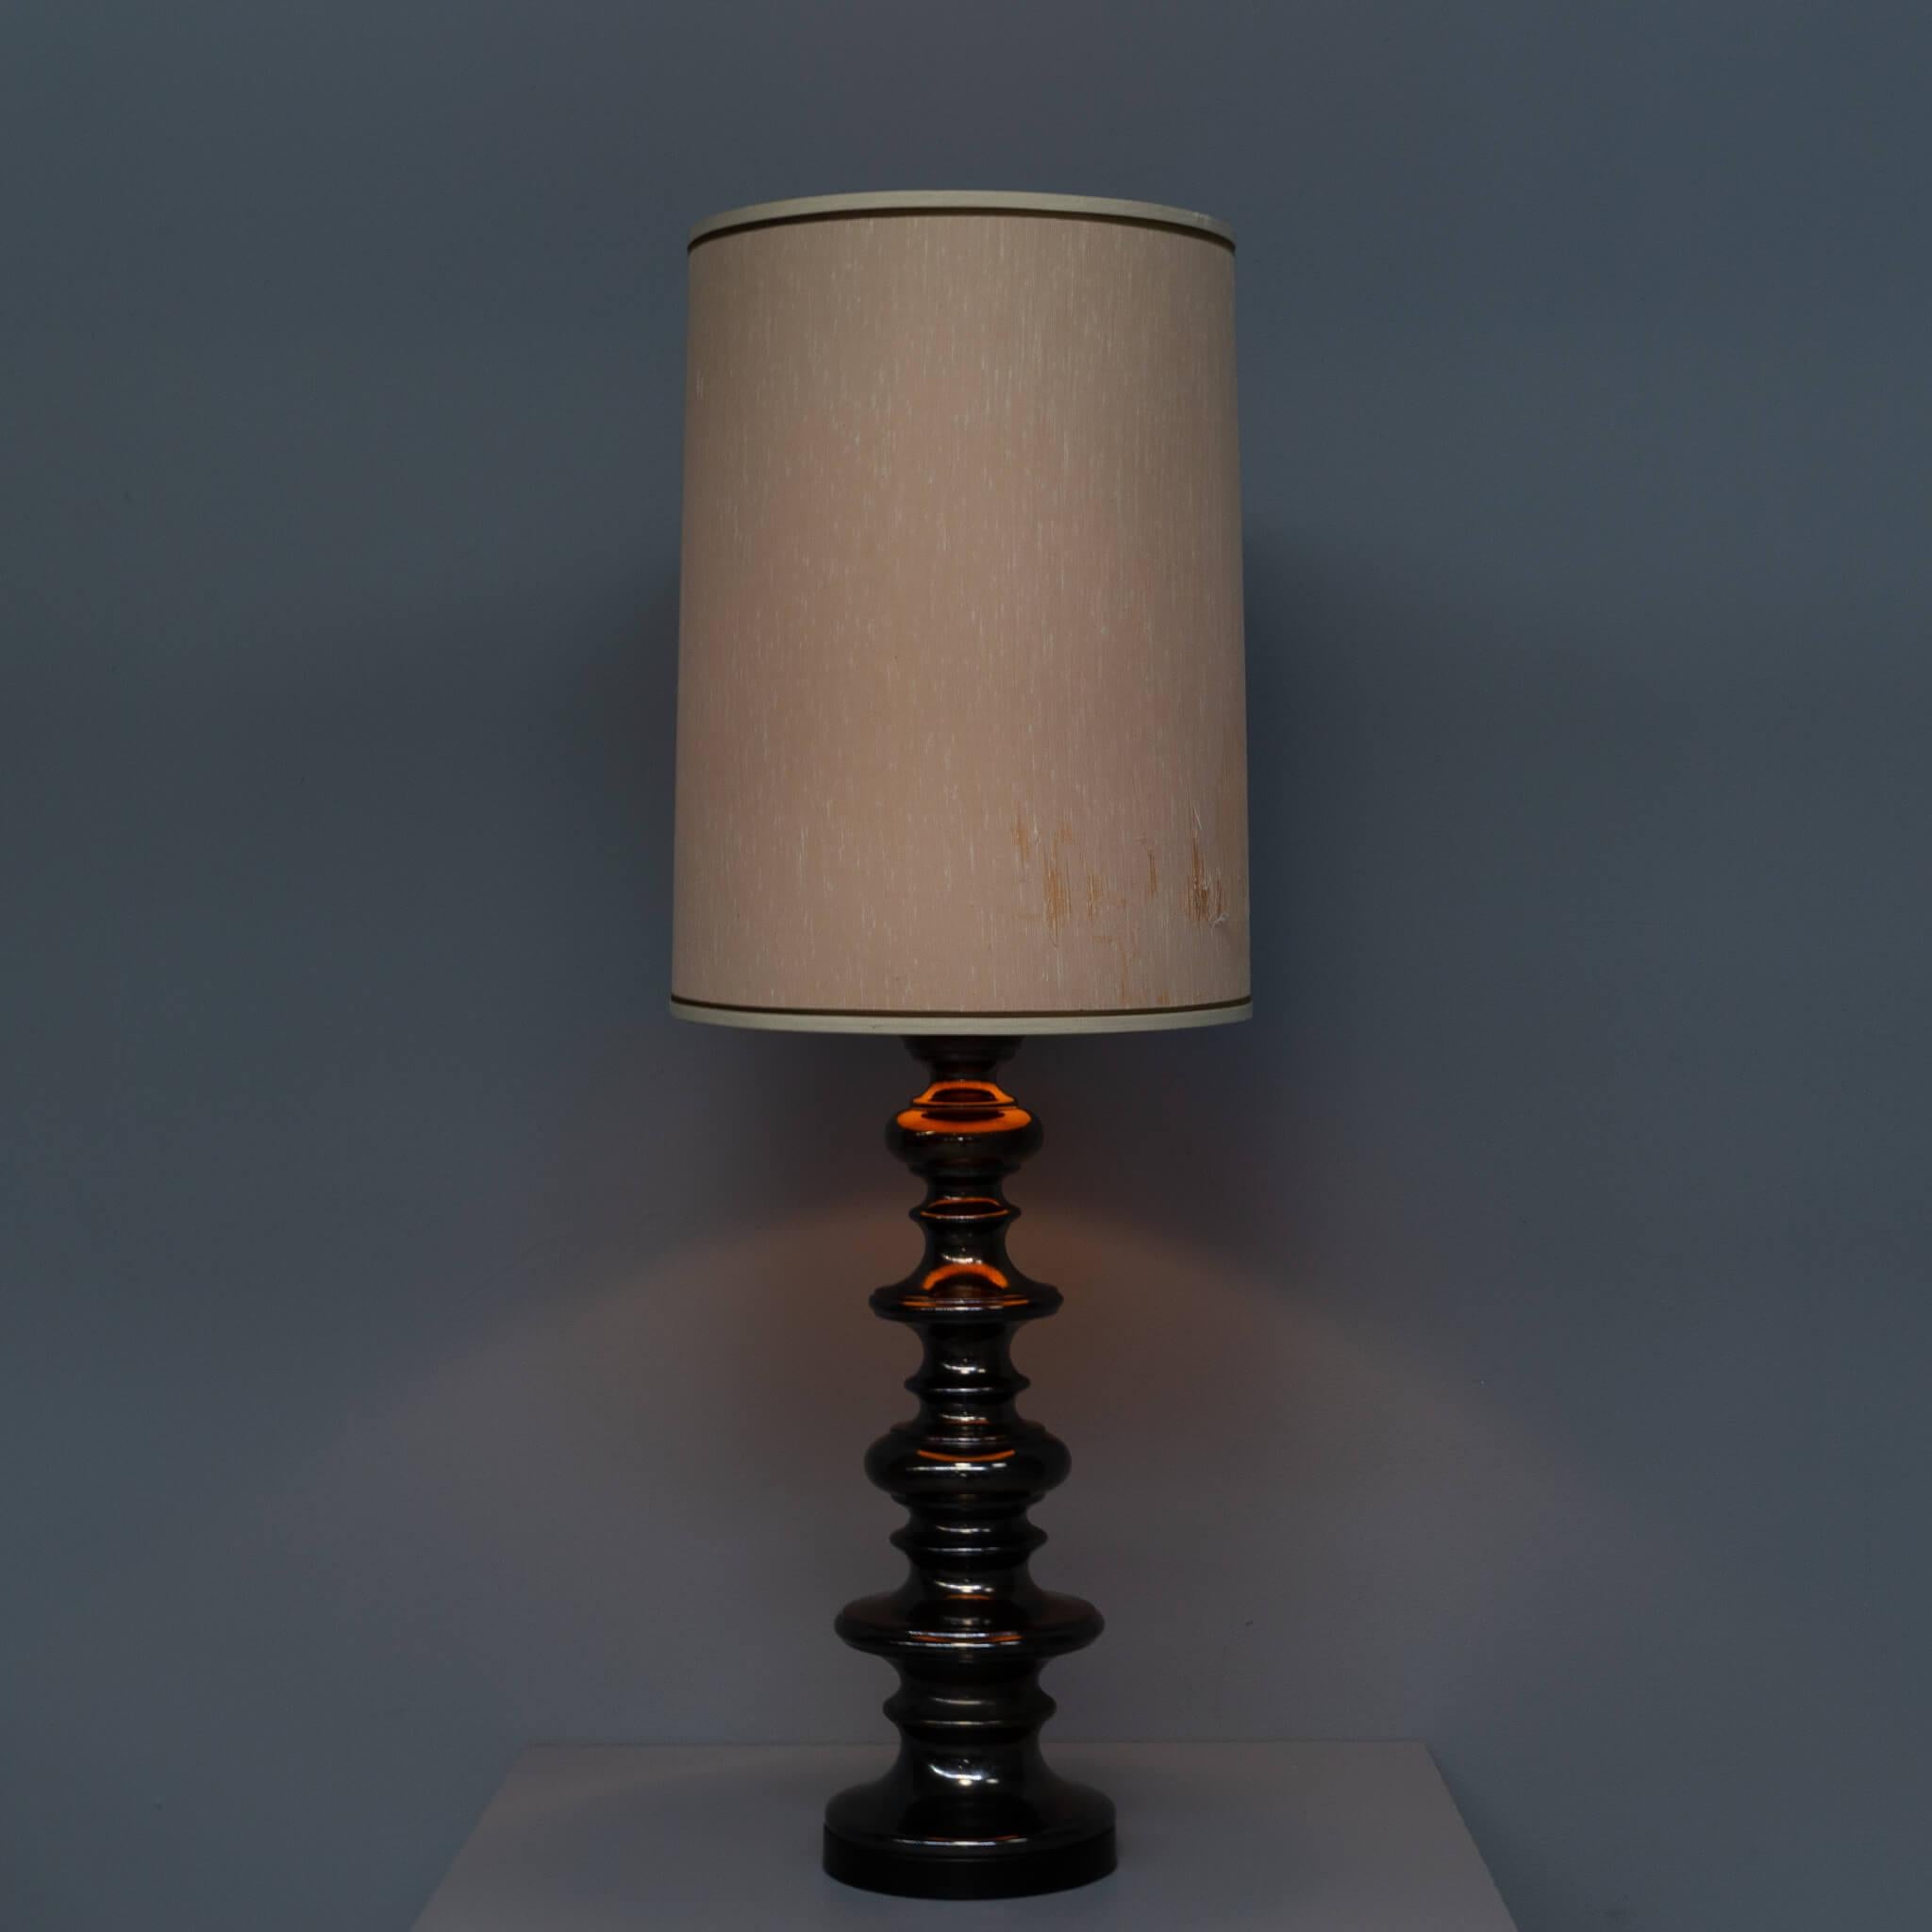 70s oil lamp